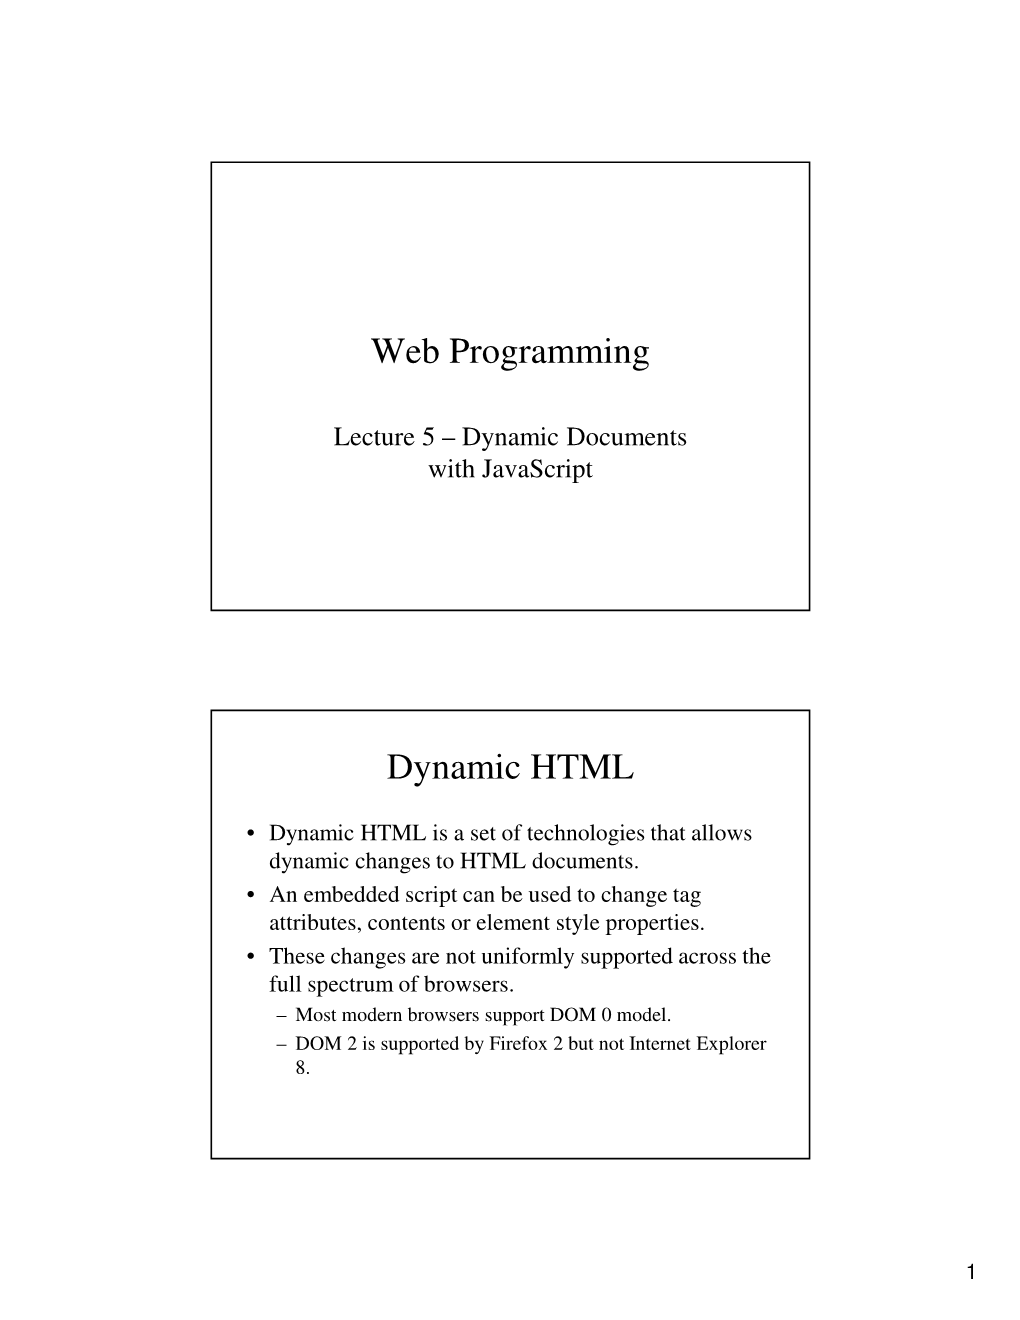 Web Programming Dynamic HTML